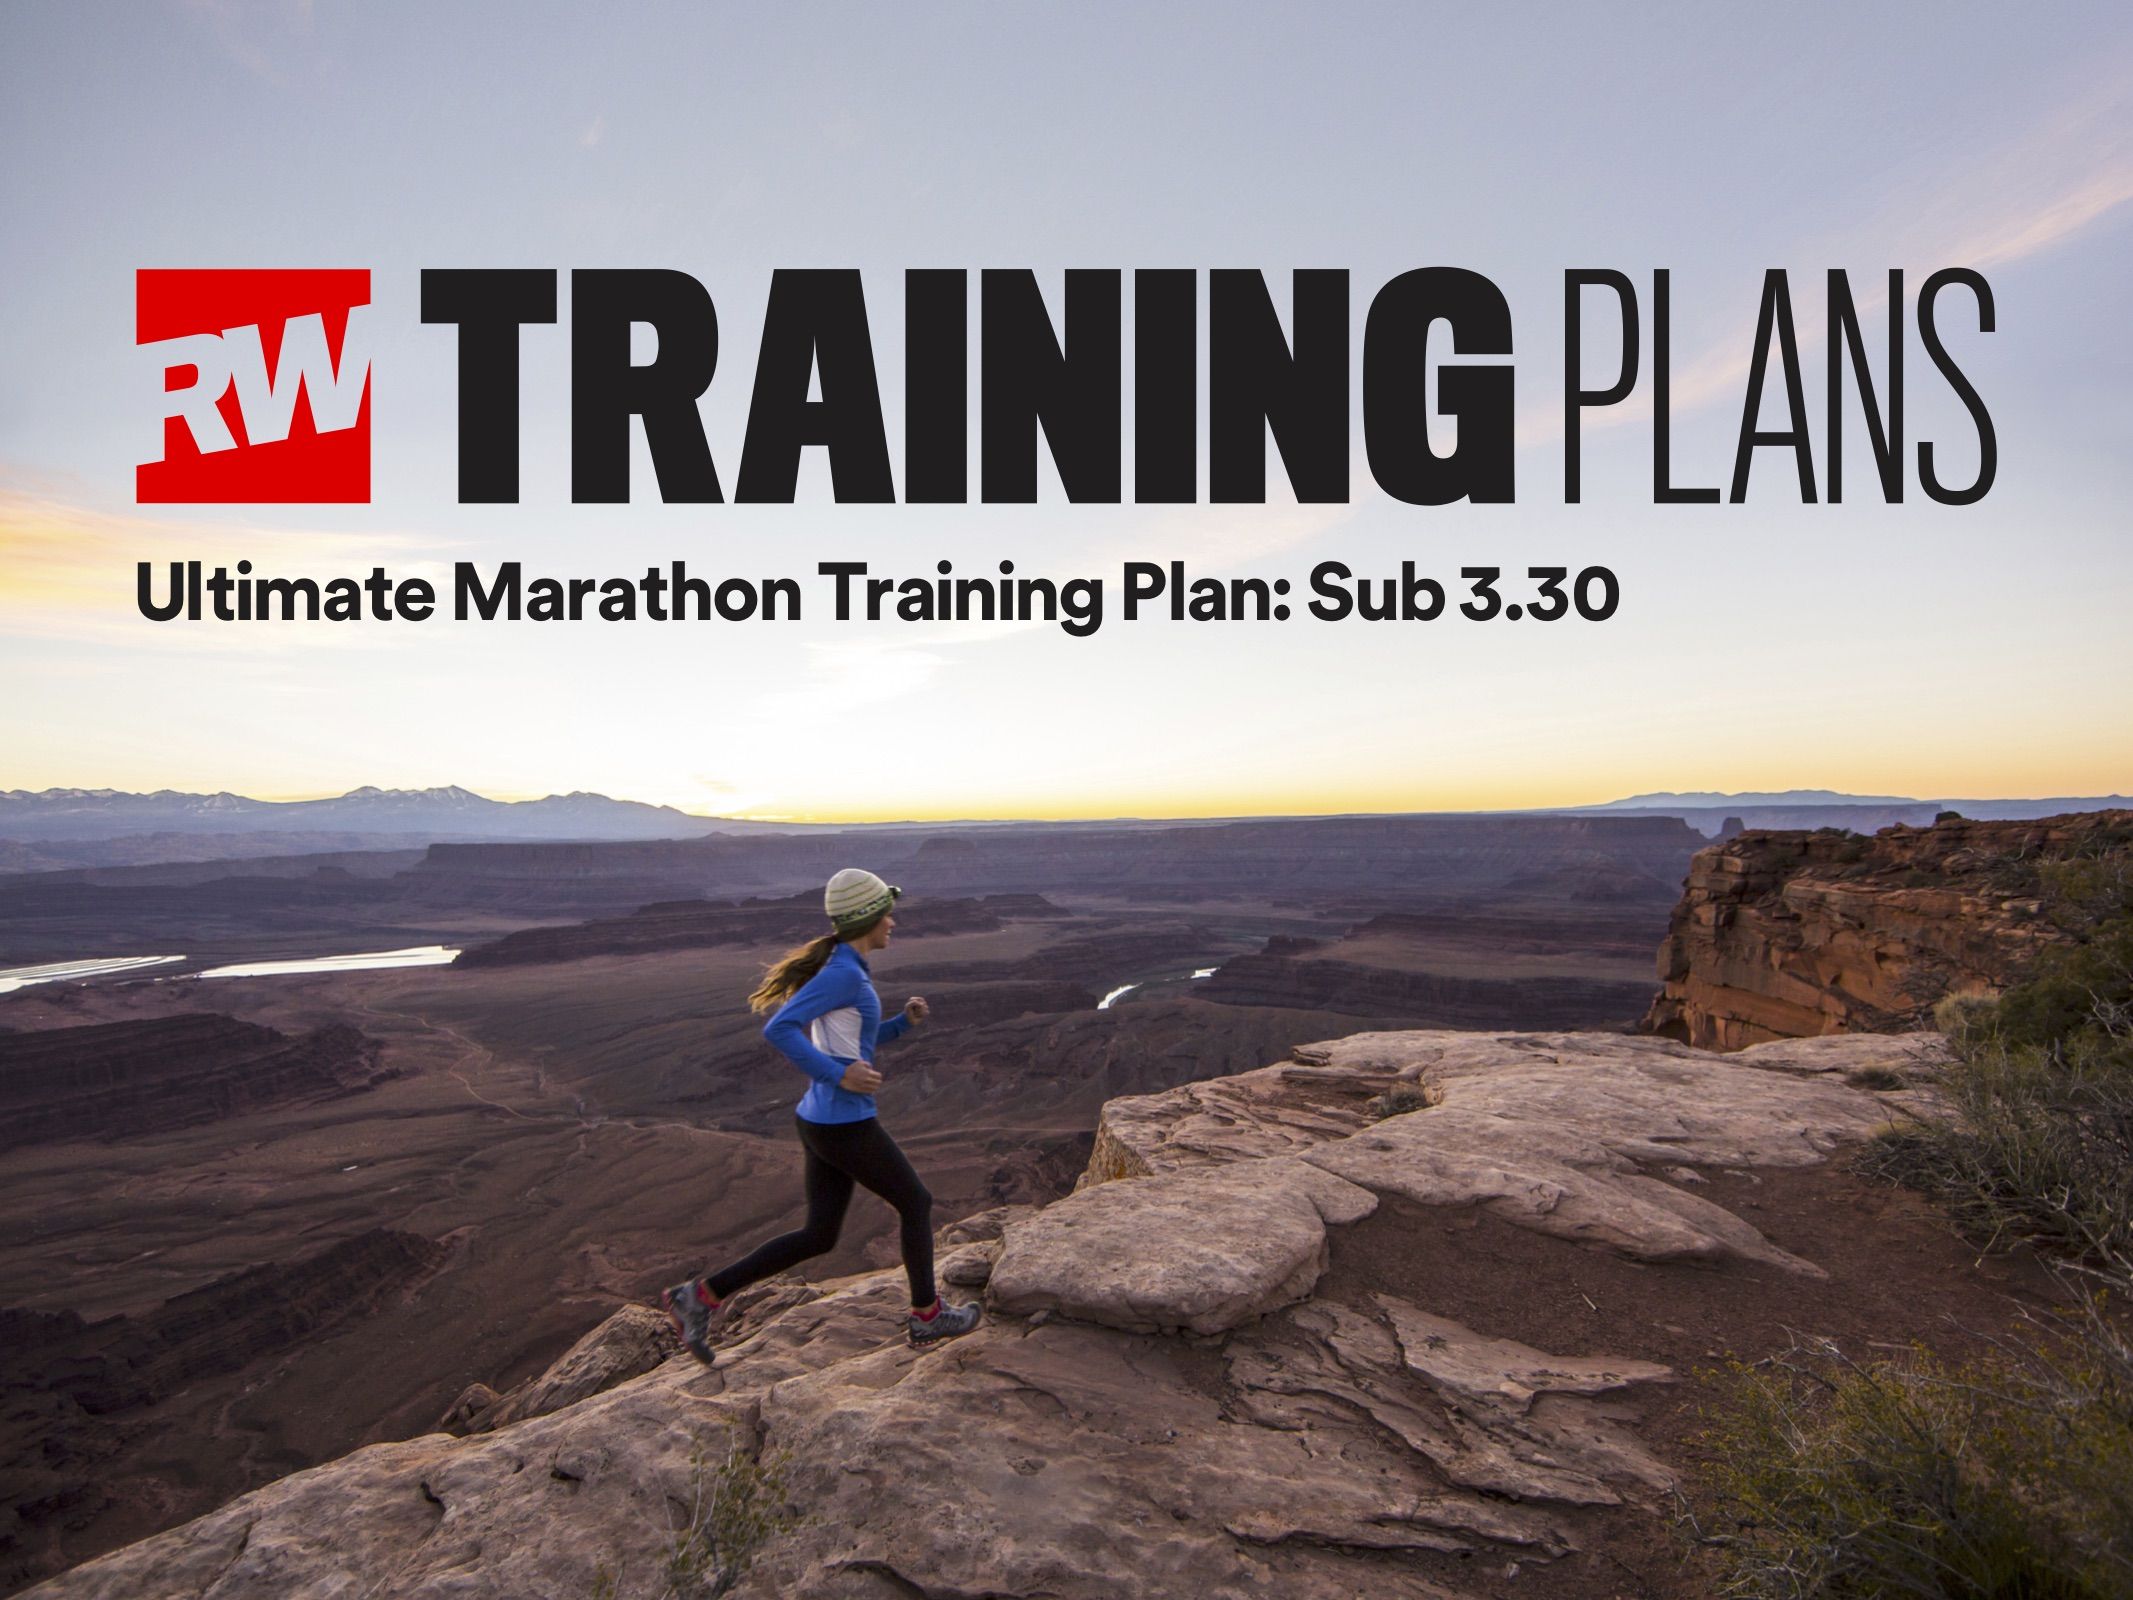 Teseo Cabaña Proponer RW's Ultimate 16-week Marathon training plan for runners looking to run  sub-3:30